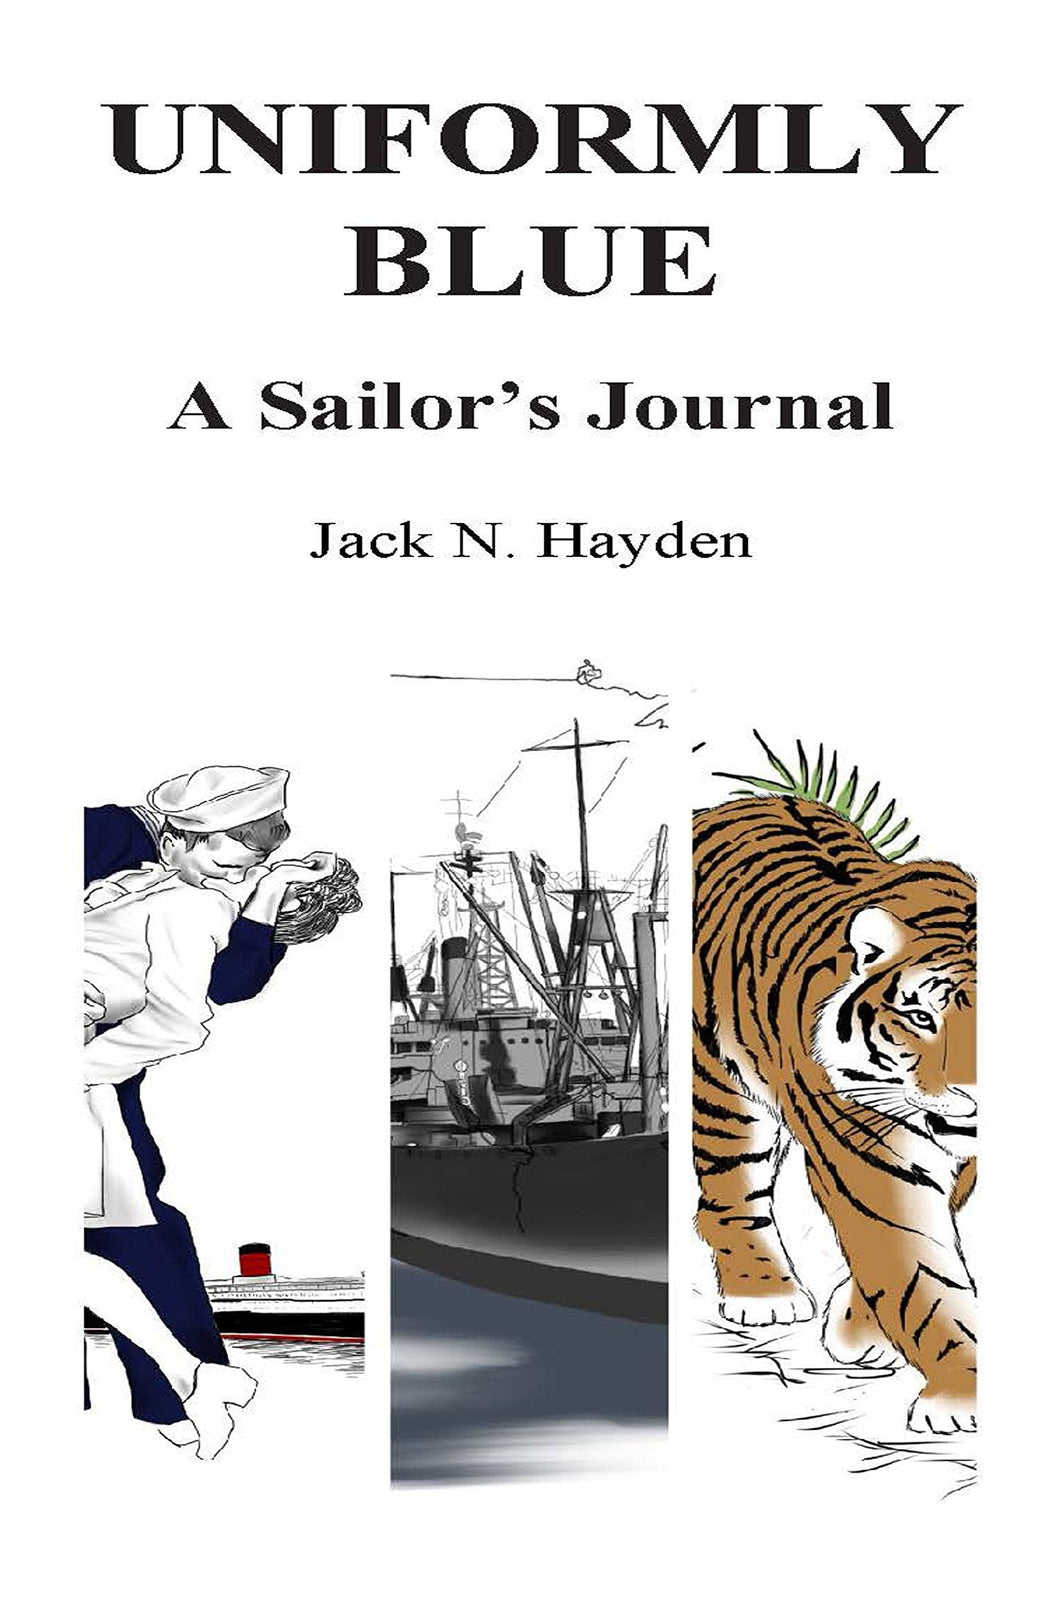 Uniformly Blue: A Sailor's Journal - Starry Night Publishing